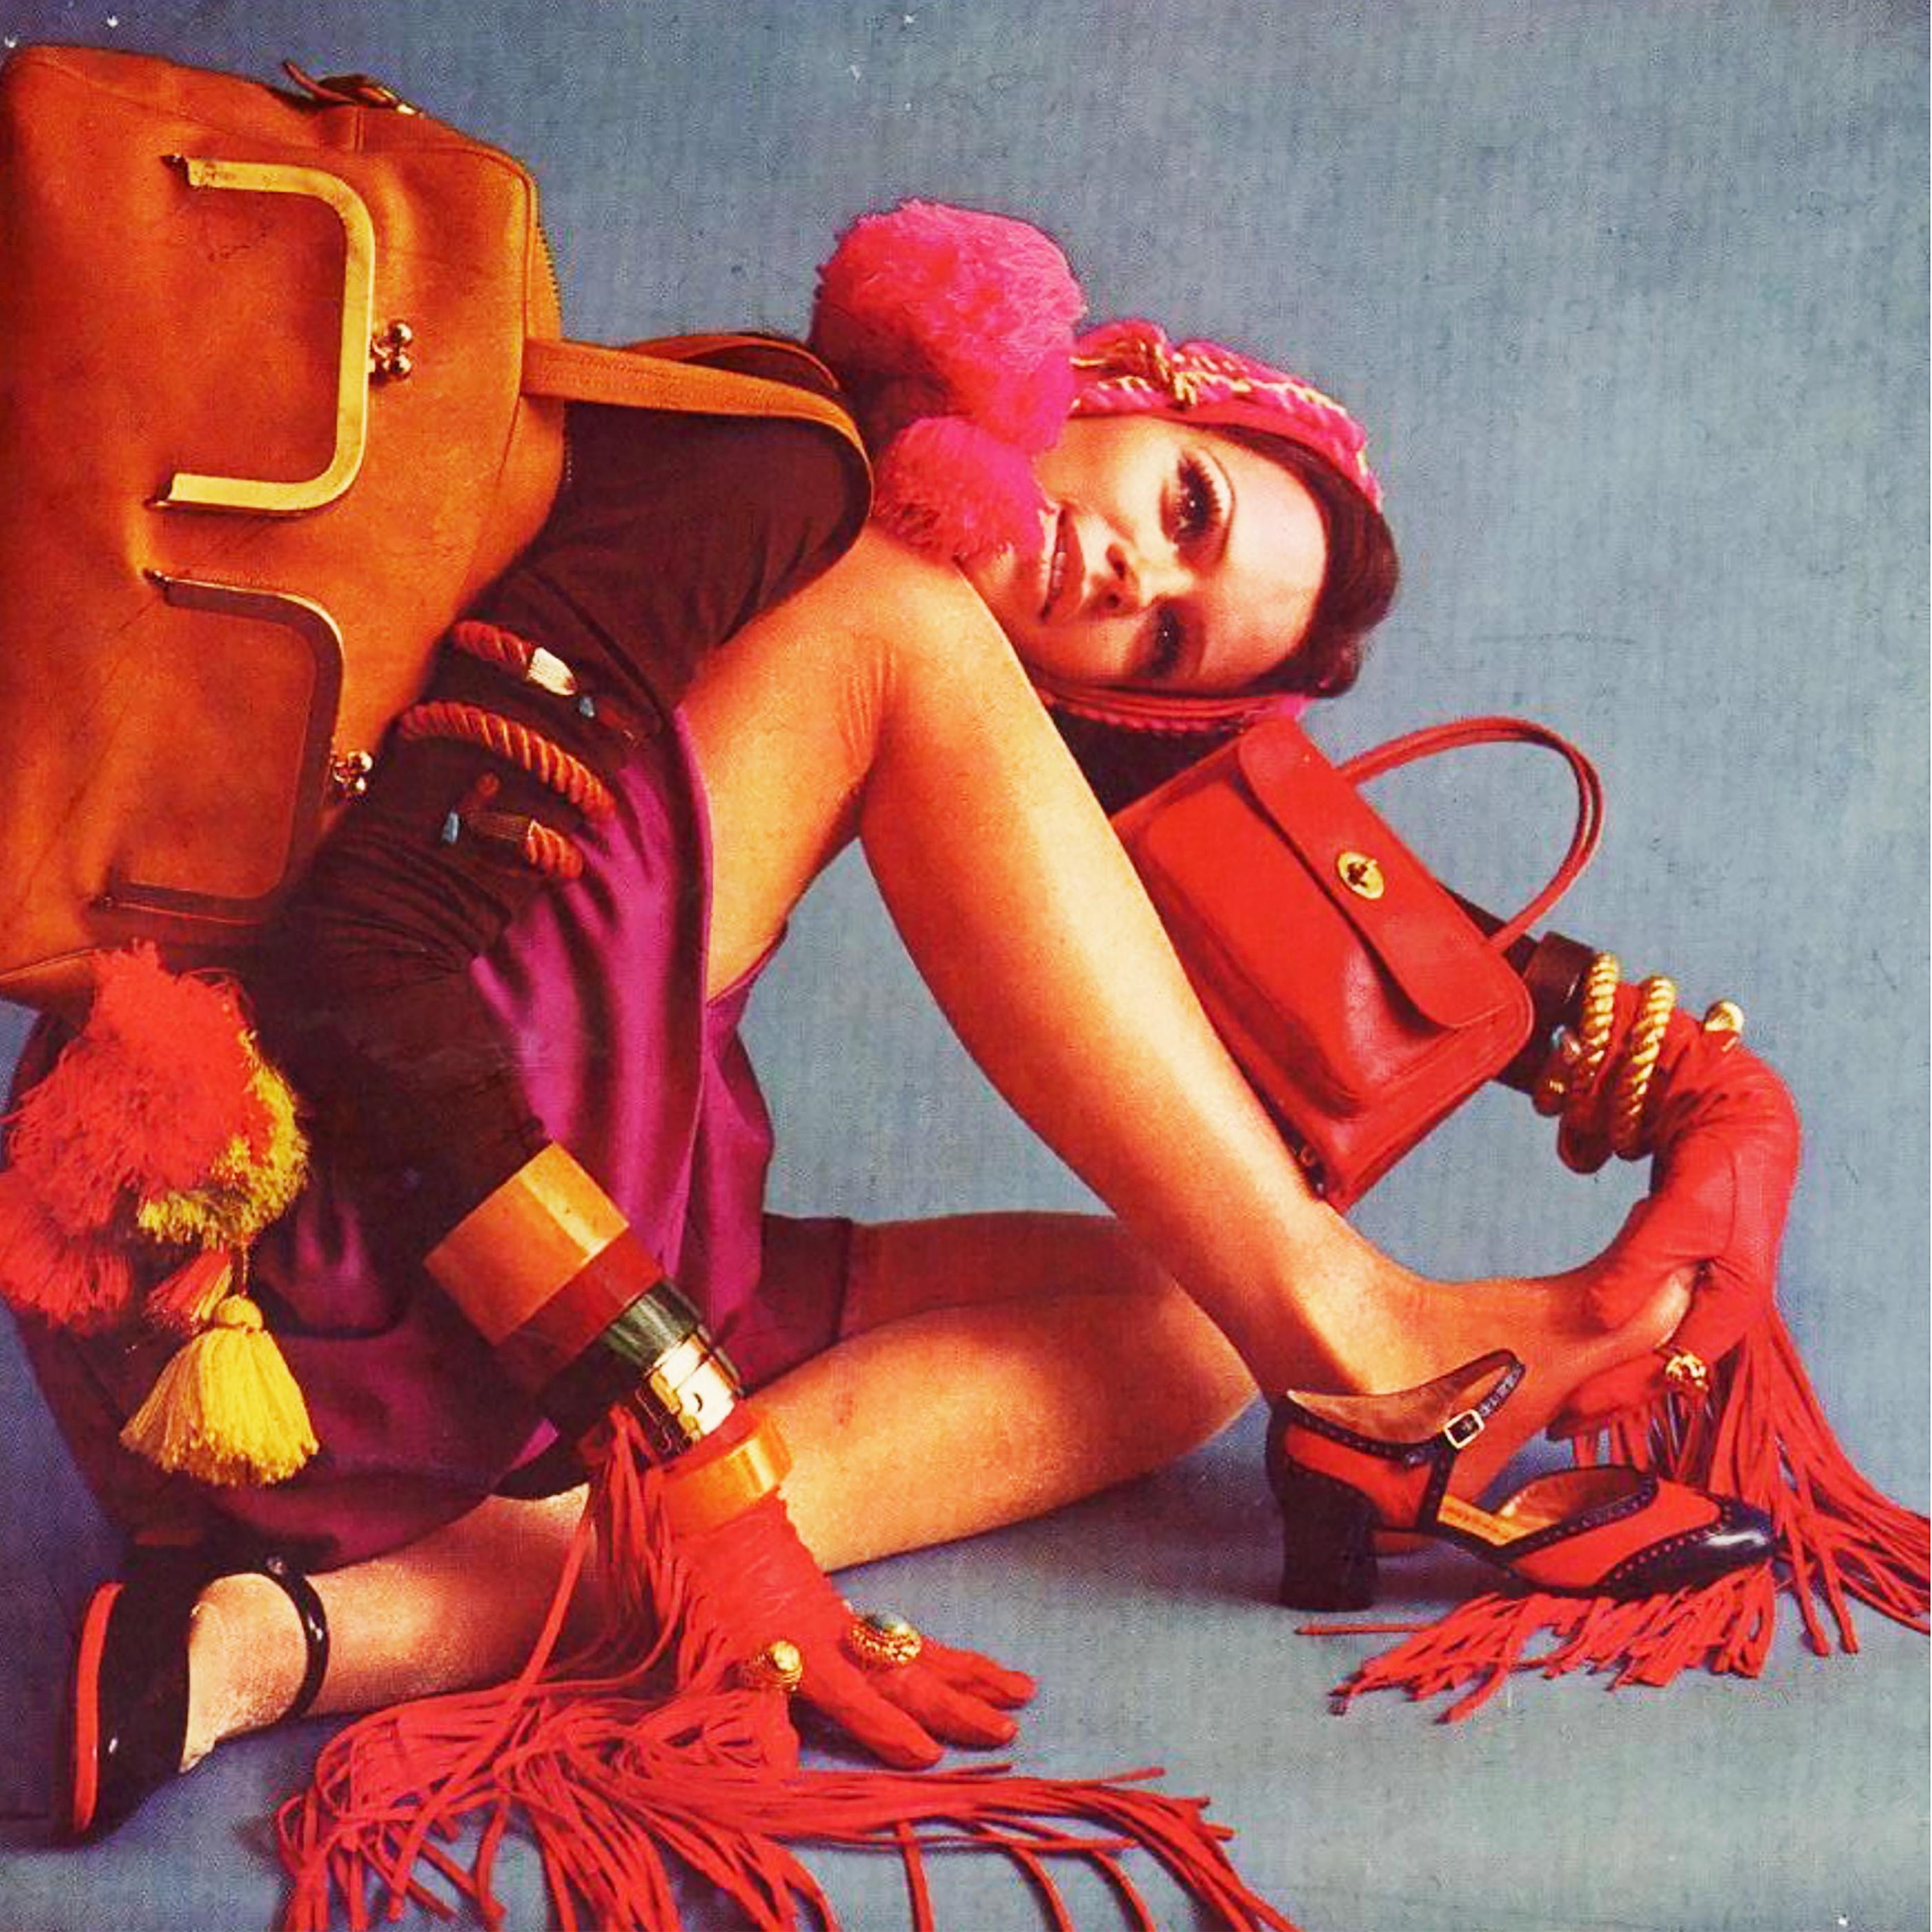 Women's or Men's Bonnie Cashin for Coach Mini Safari Tote Red Leather Turn Lock Bag Vintage HTF For Sale